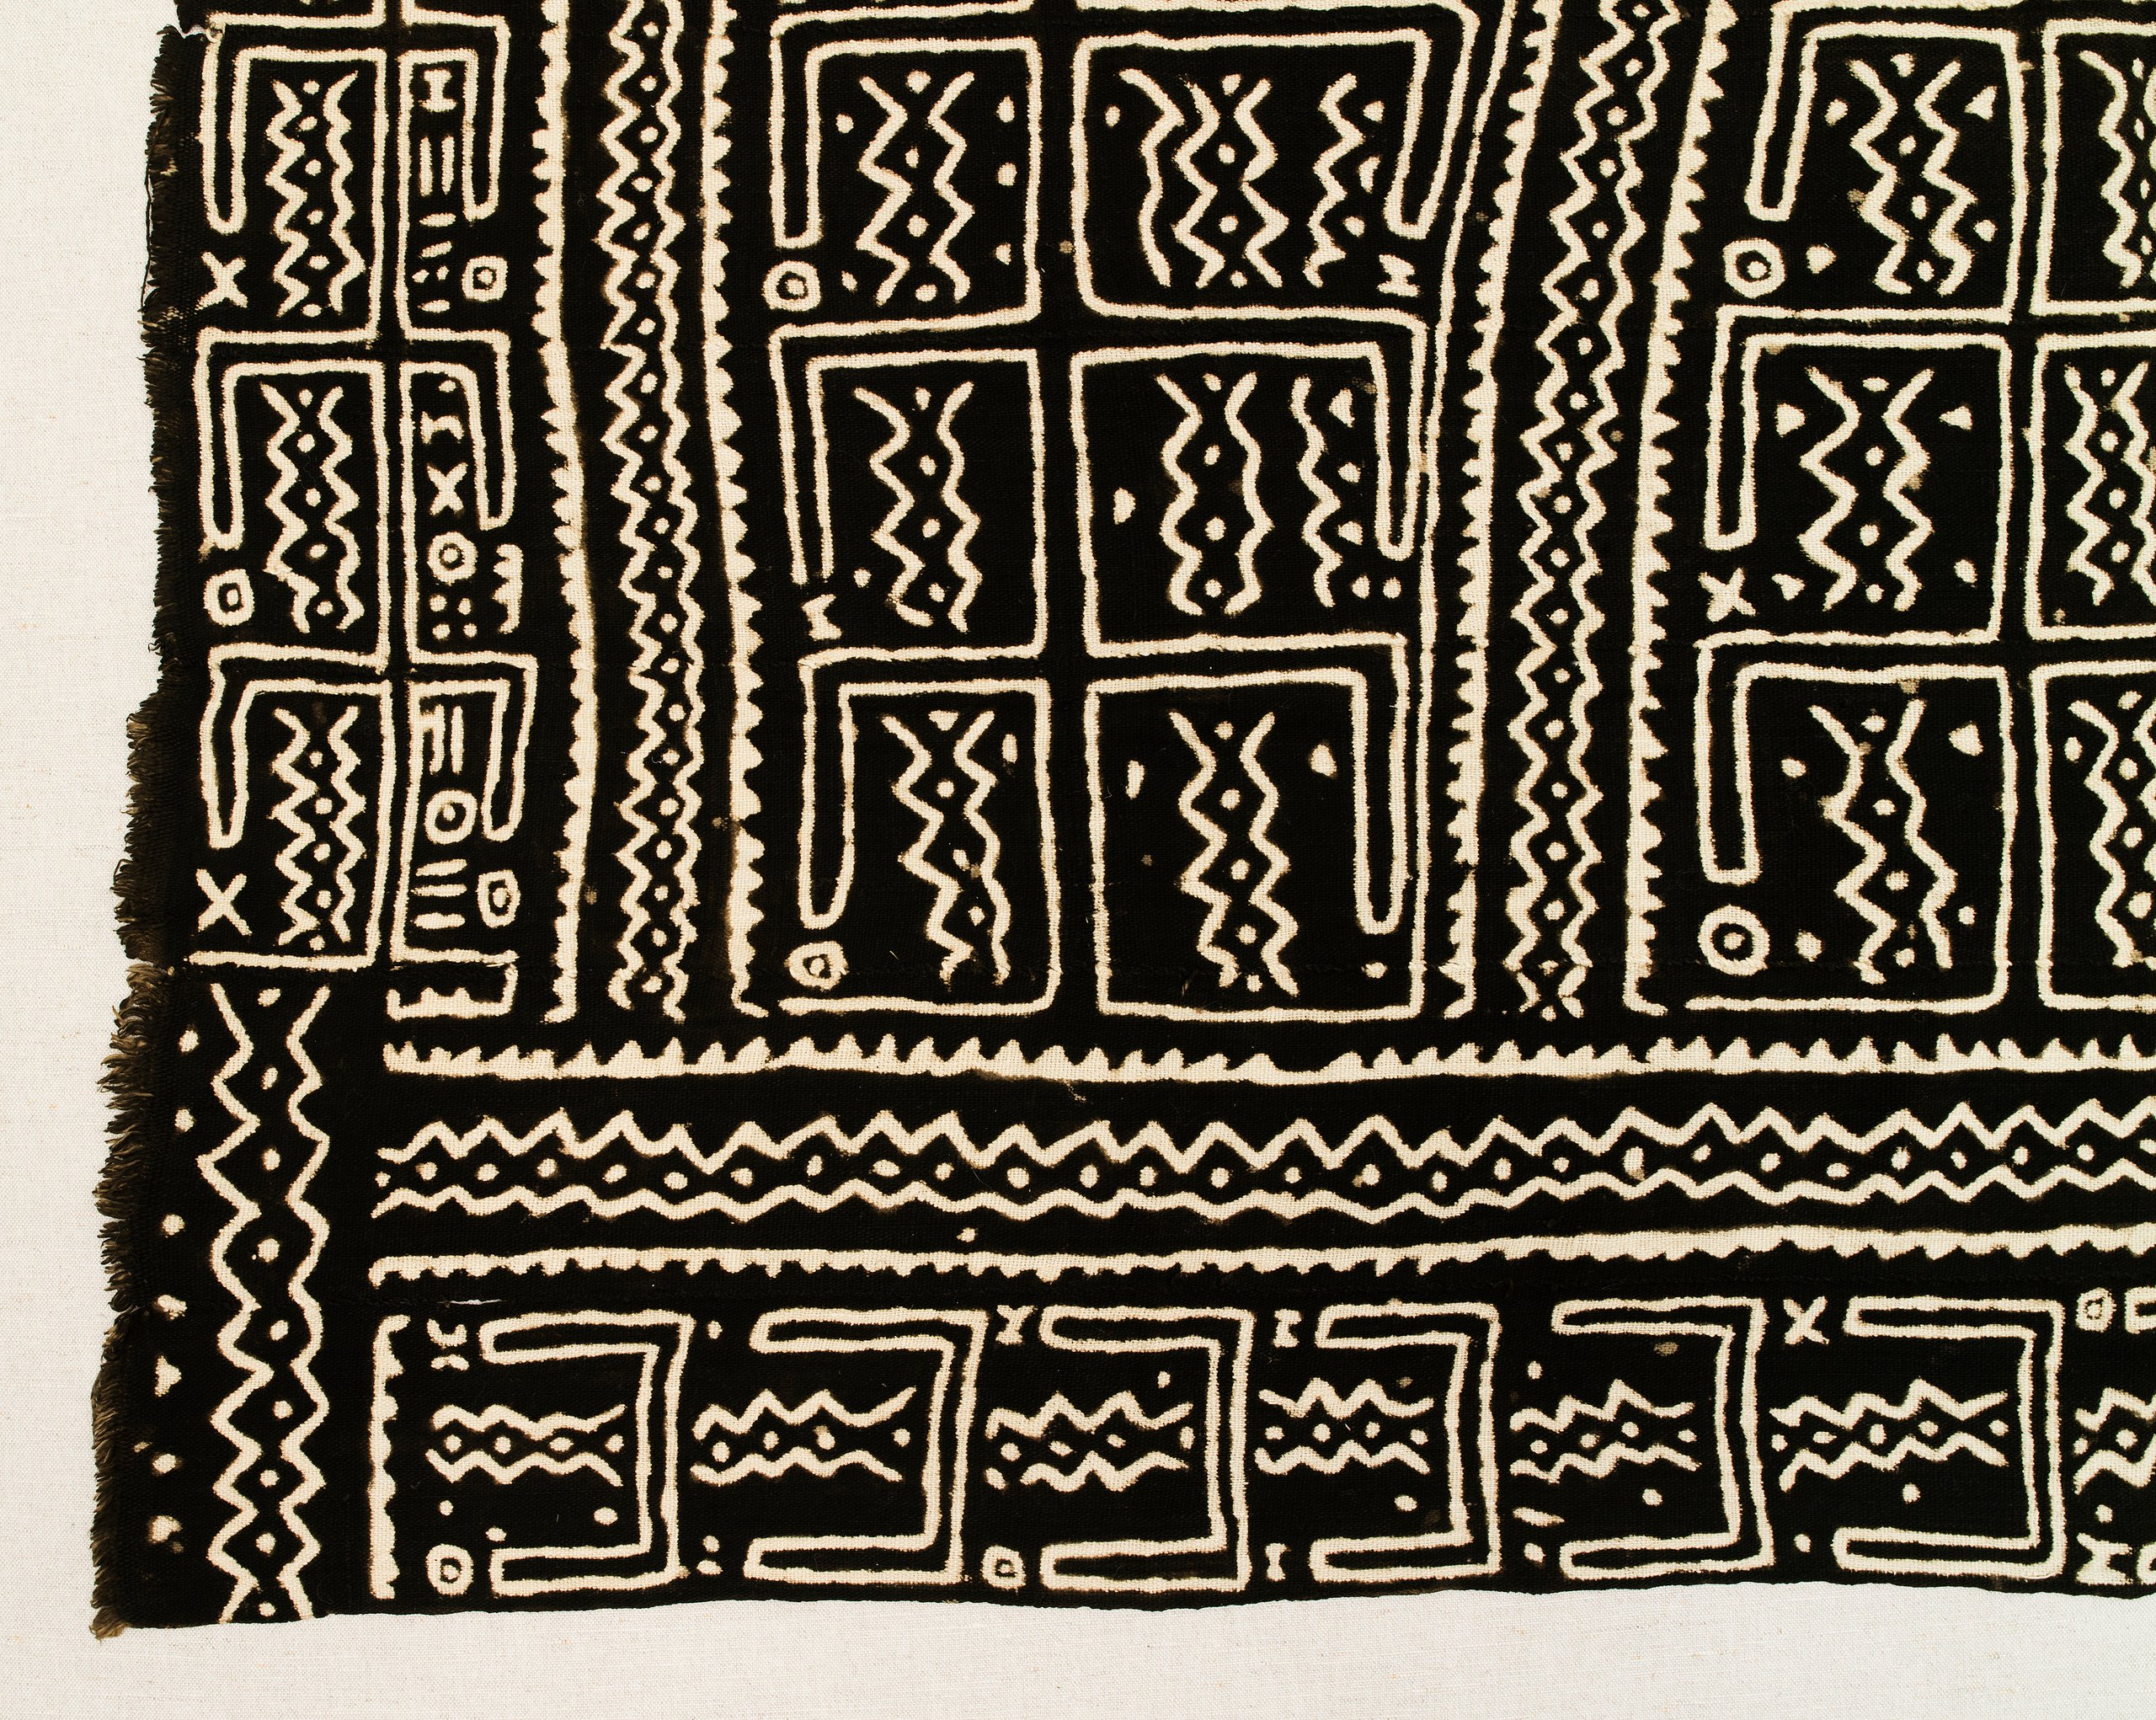 Bogolanfini or mud cloth from Mali